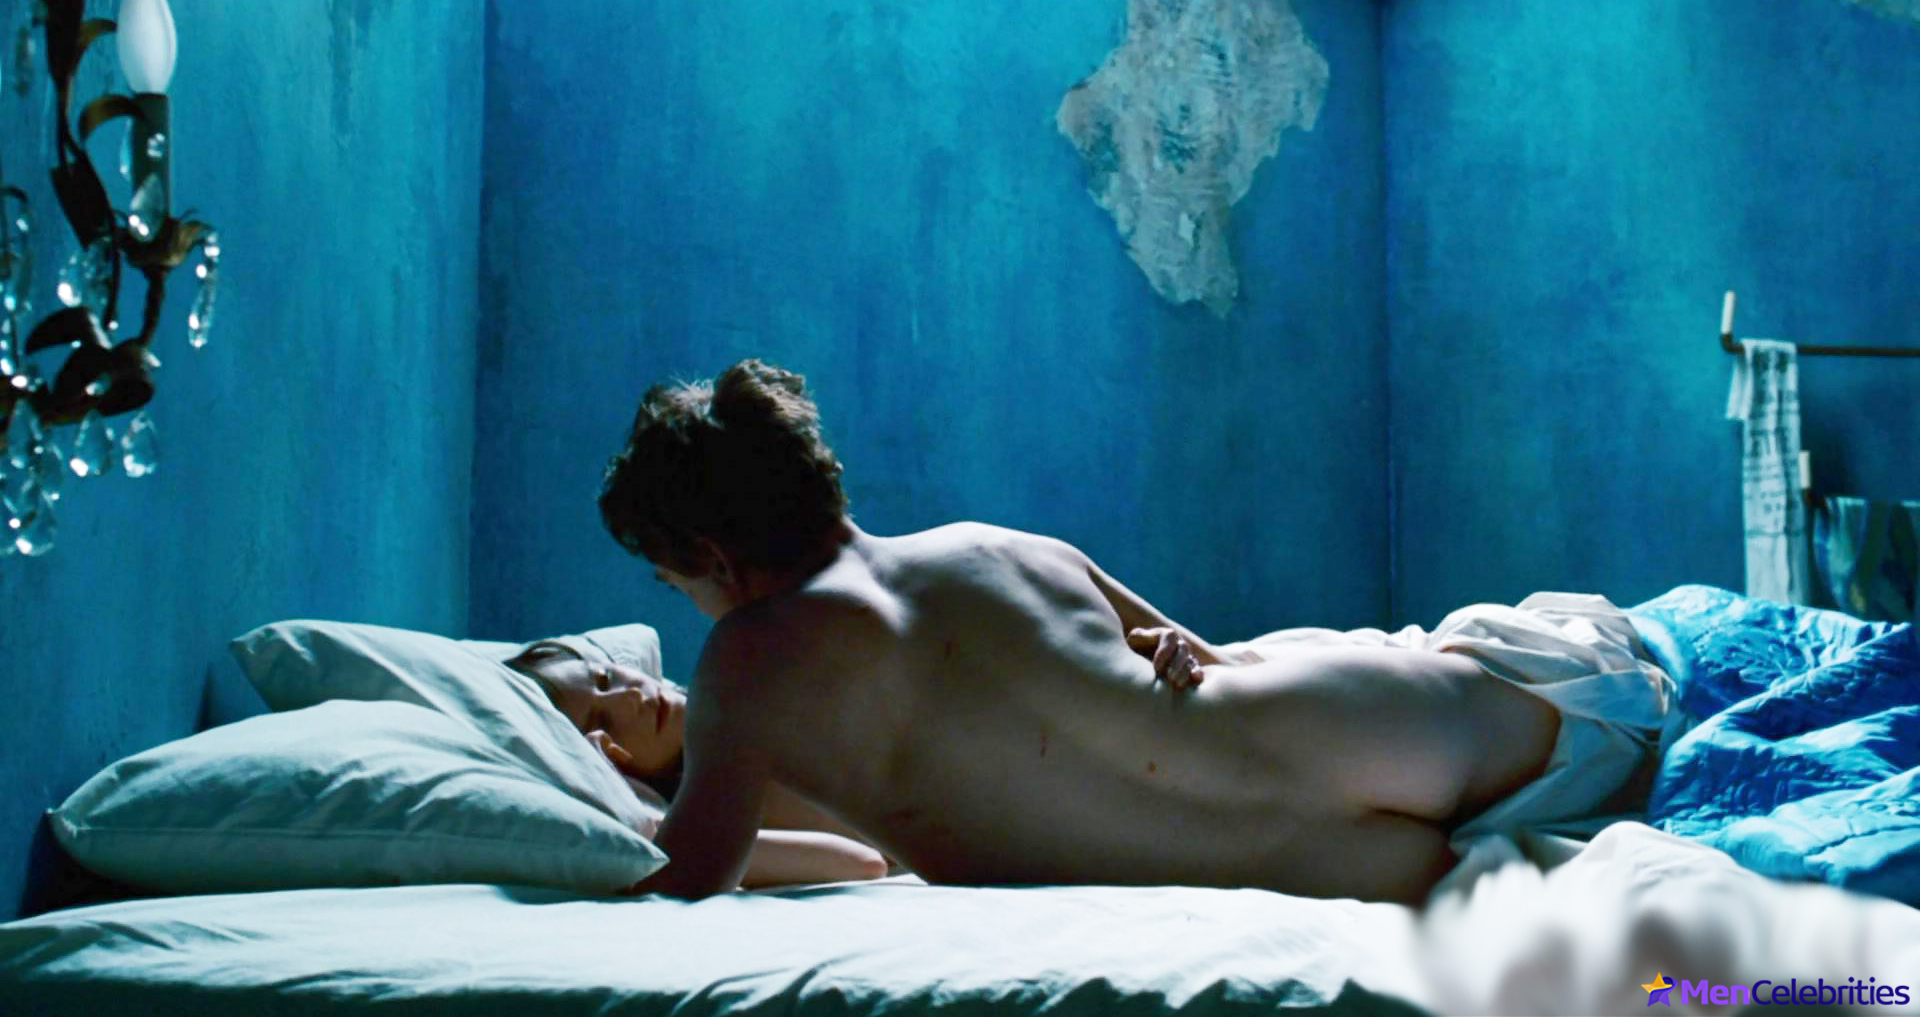 Robert Downey Jr. nude and hot gay movie scenes.